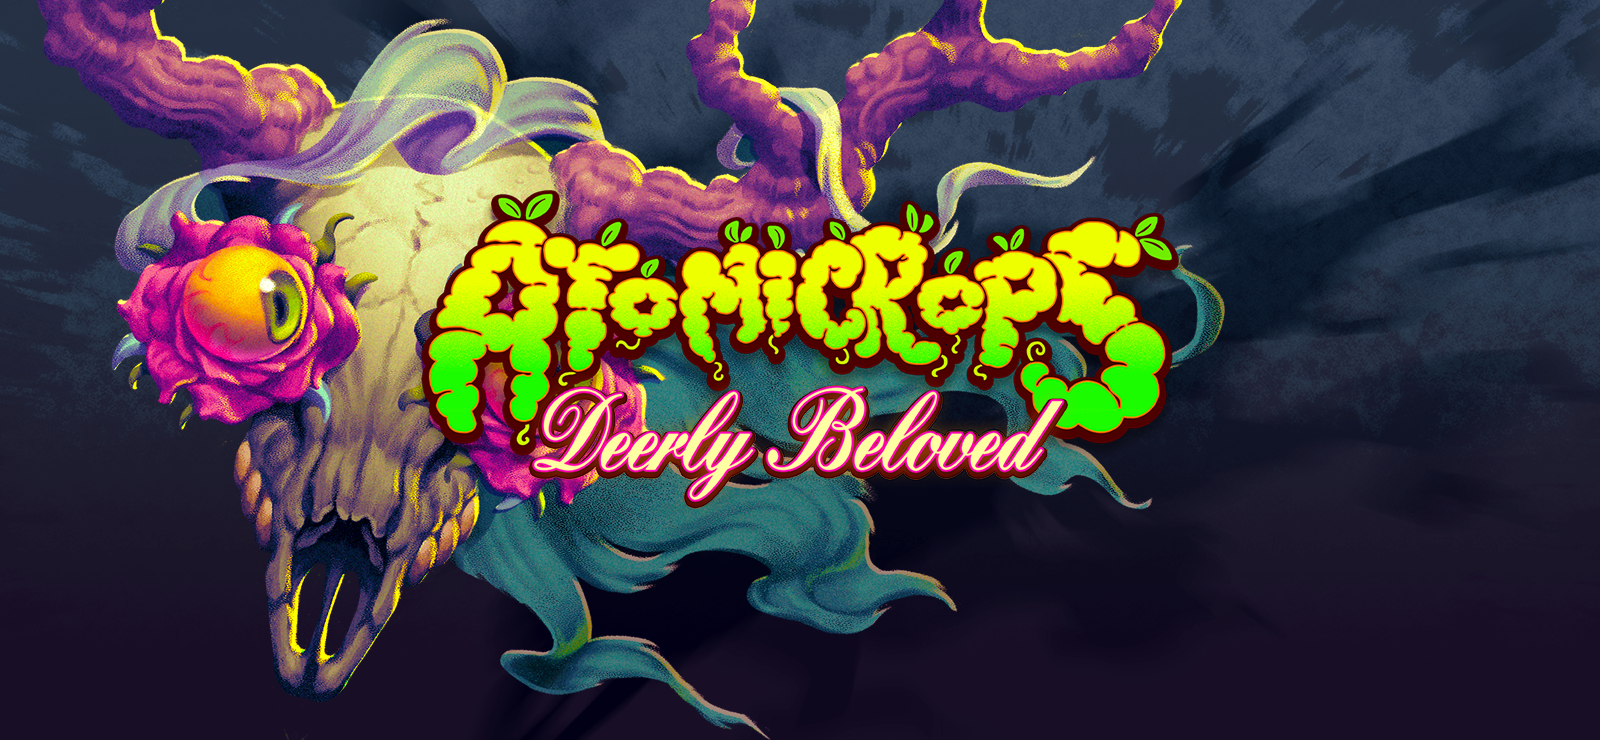 Atomicrops: Deerly Beloved